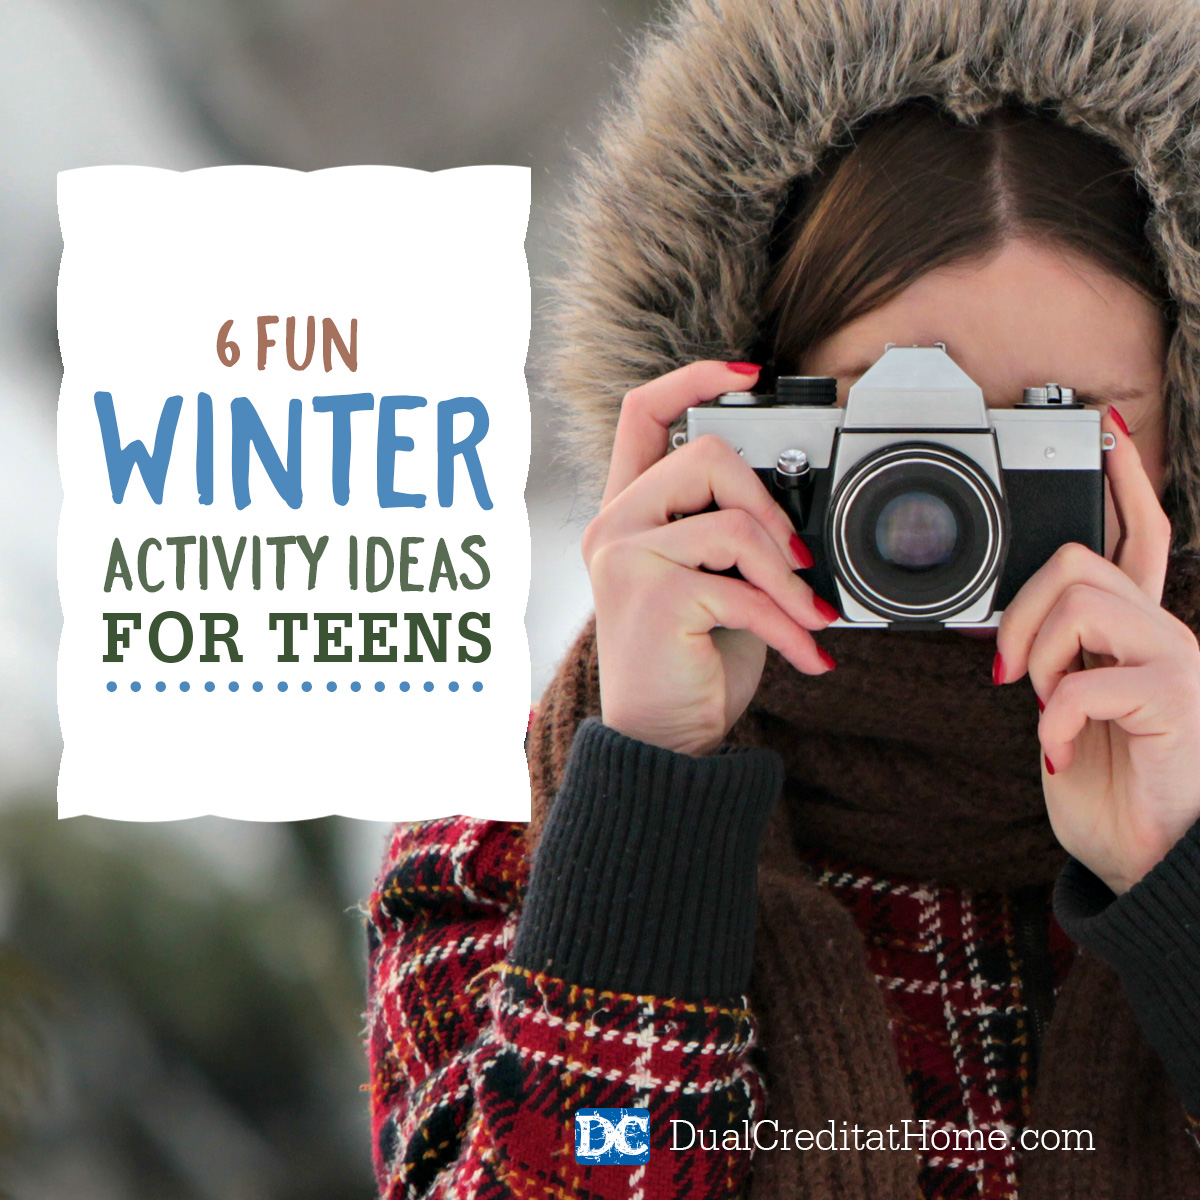 6 Fun Winter Activity Ideas for Teens